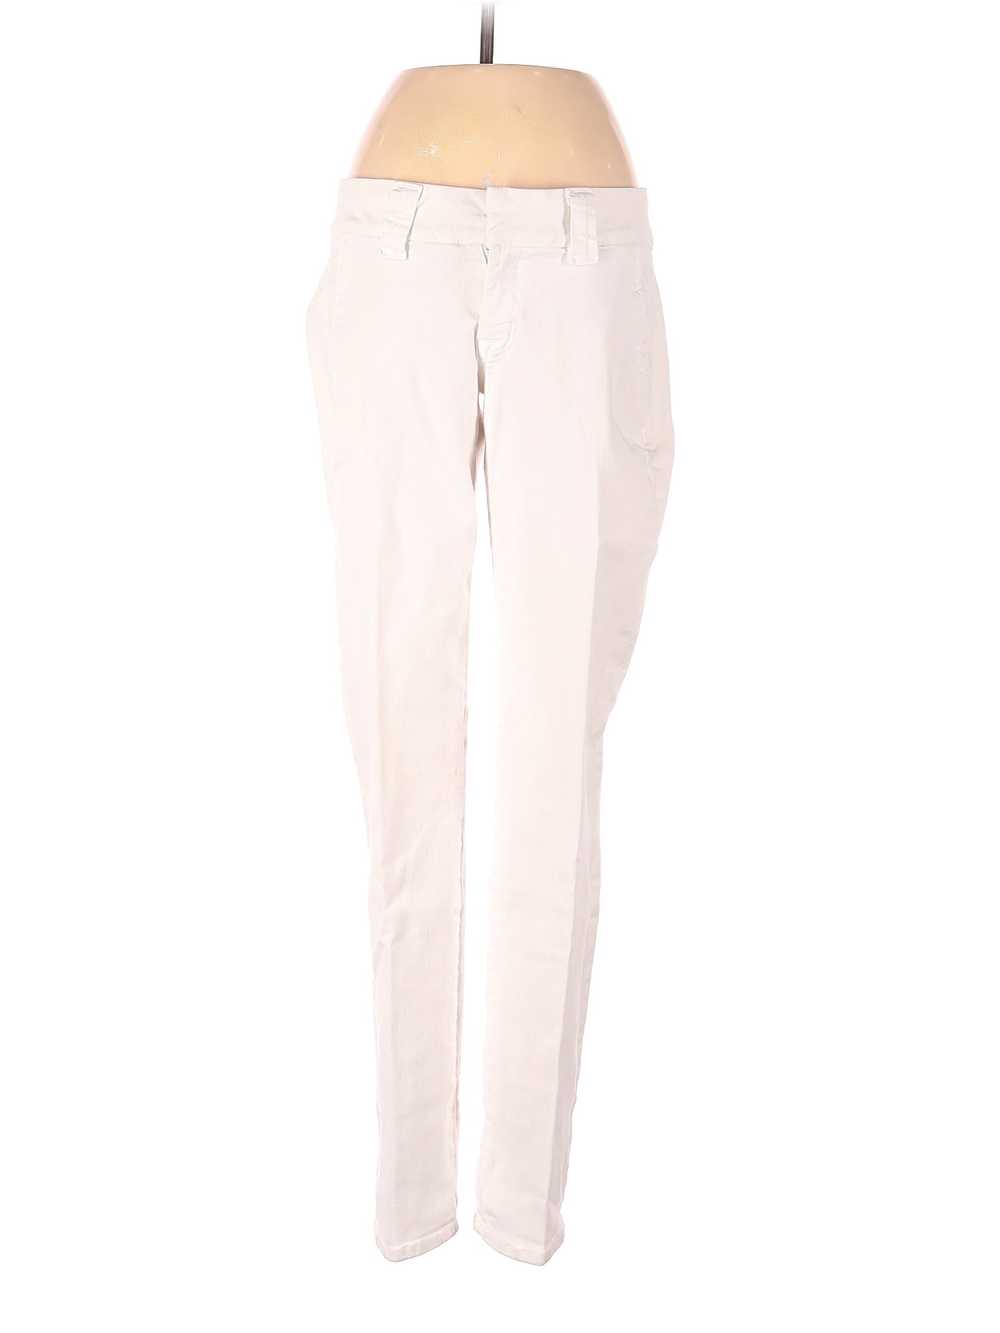 Hudson Jeans Women Ivory Khakis 25W - image 1